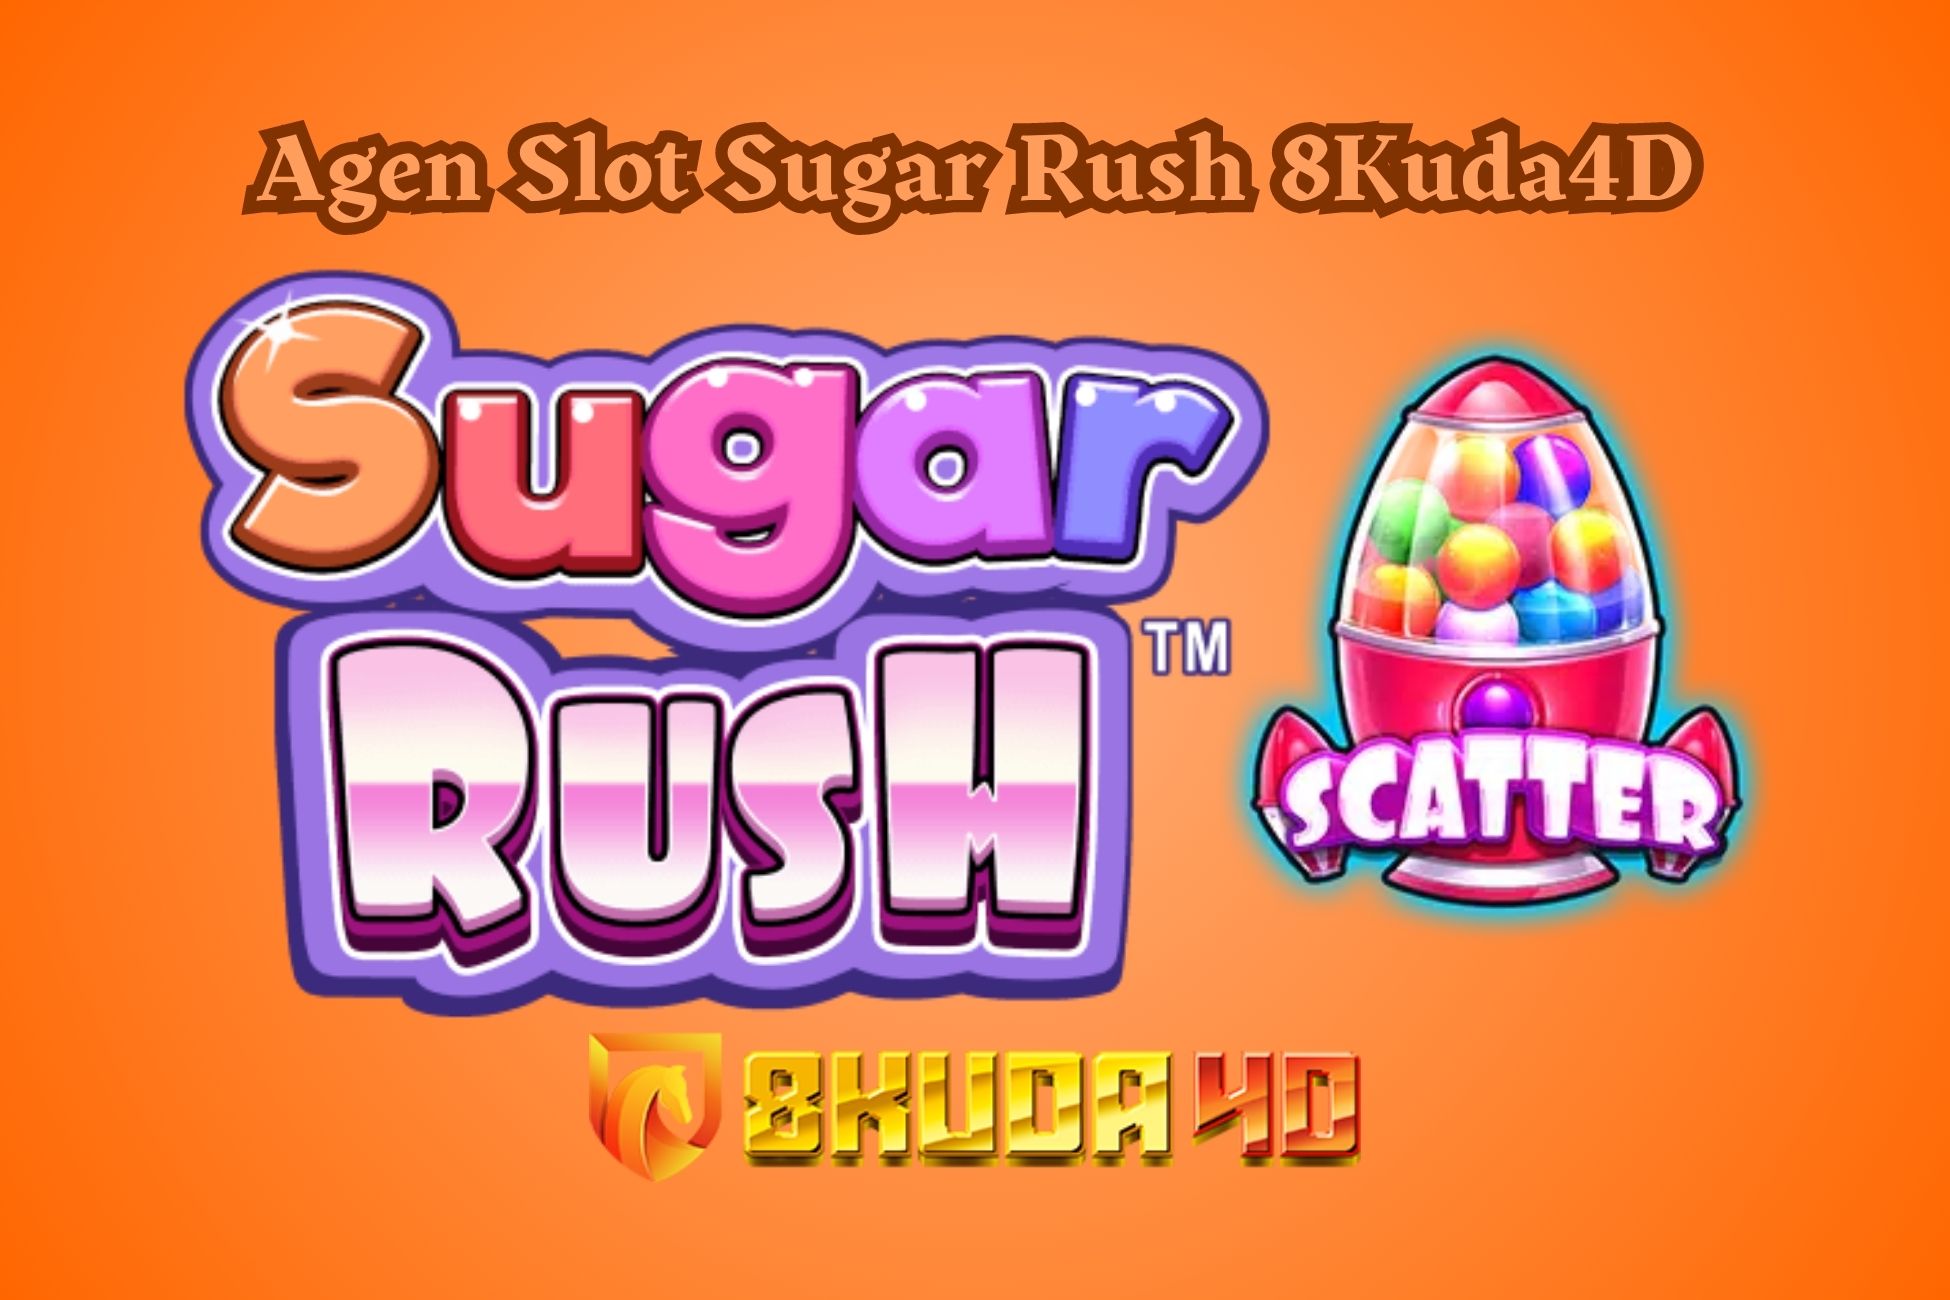 Agen Slot Sugar Rush 8Kuda4D